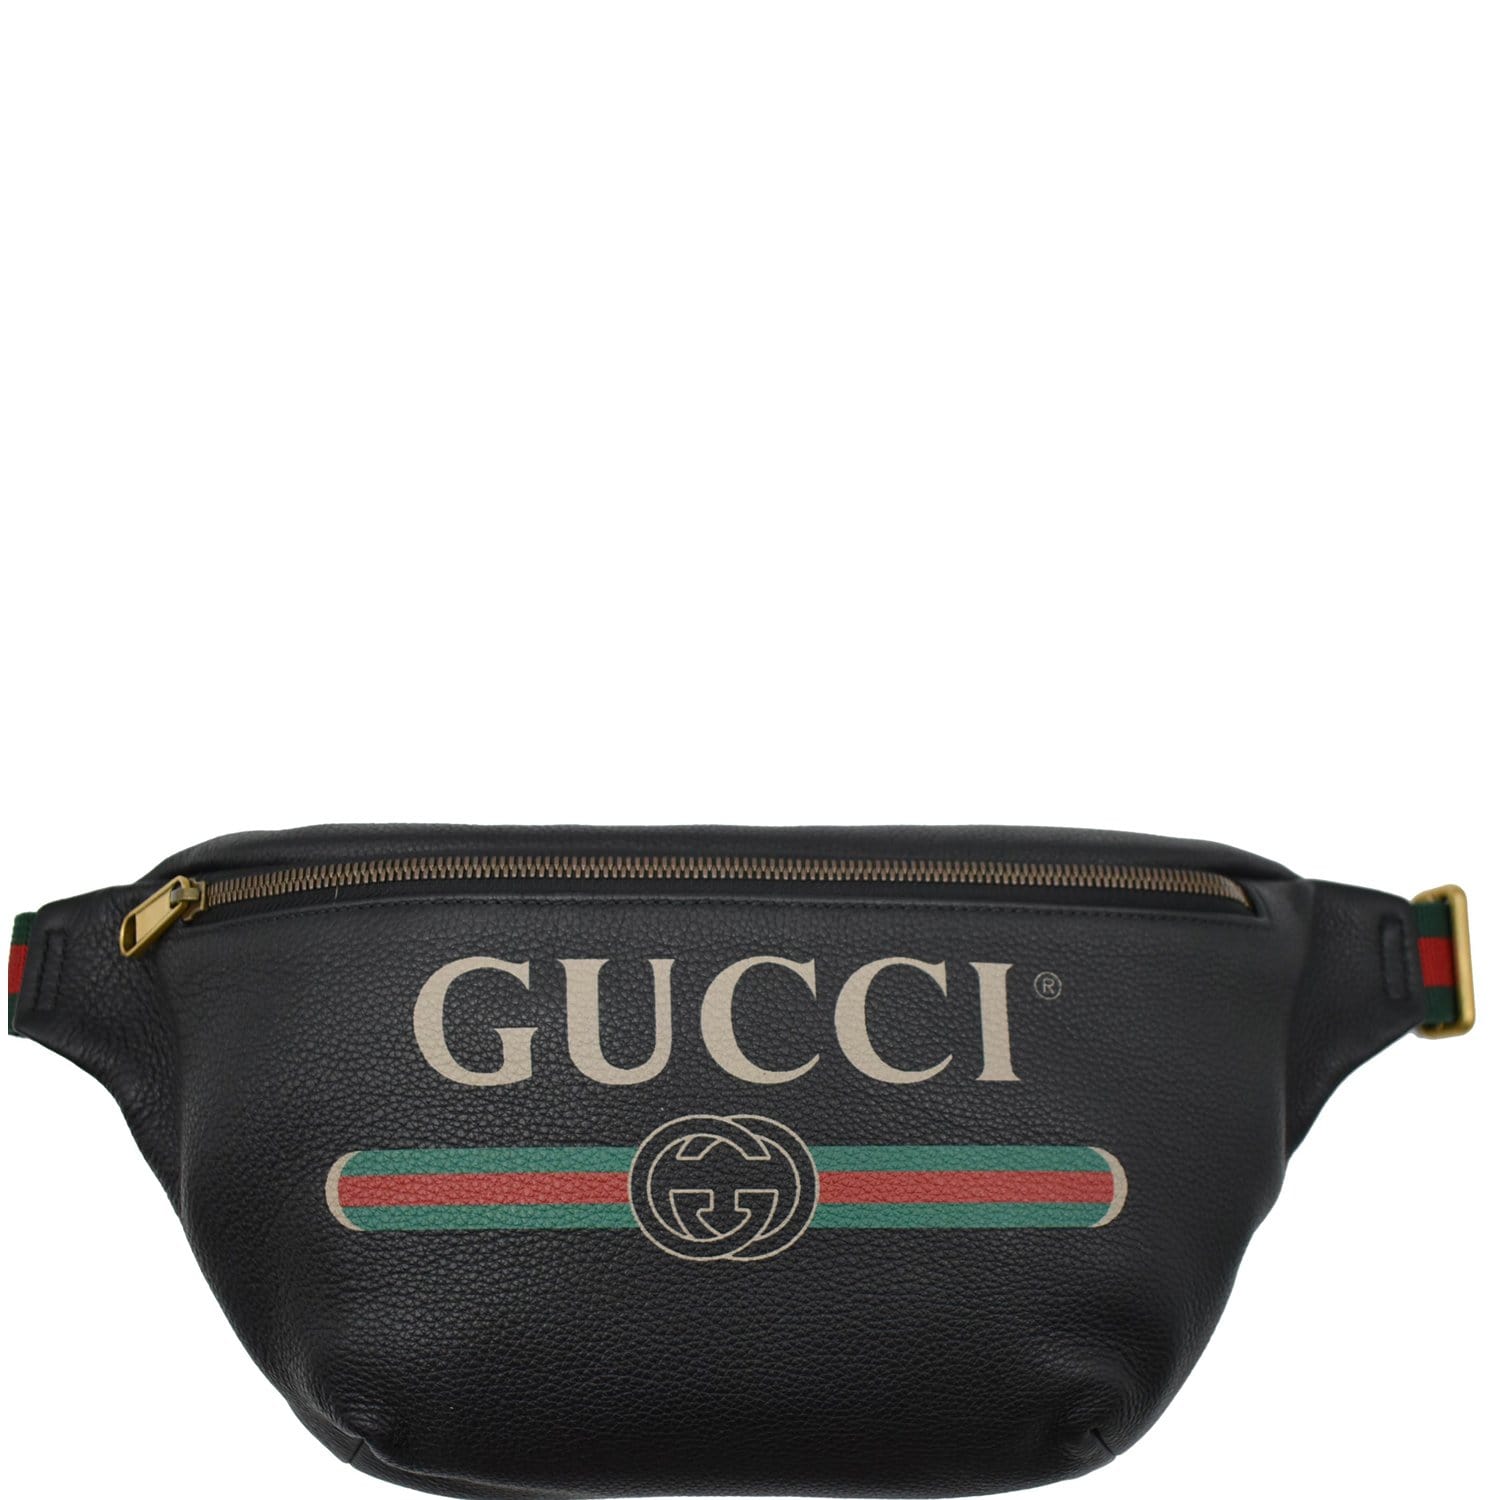 Gucci Fanny Packs